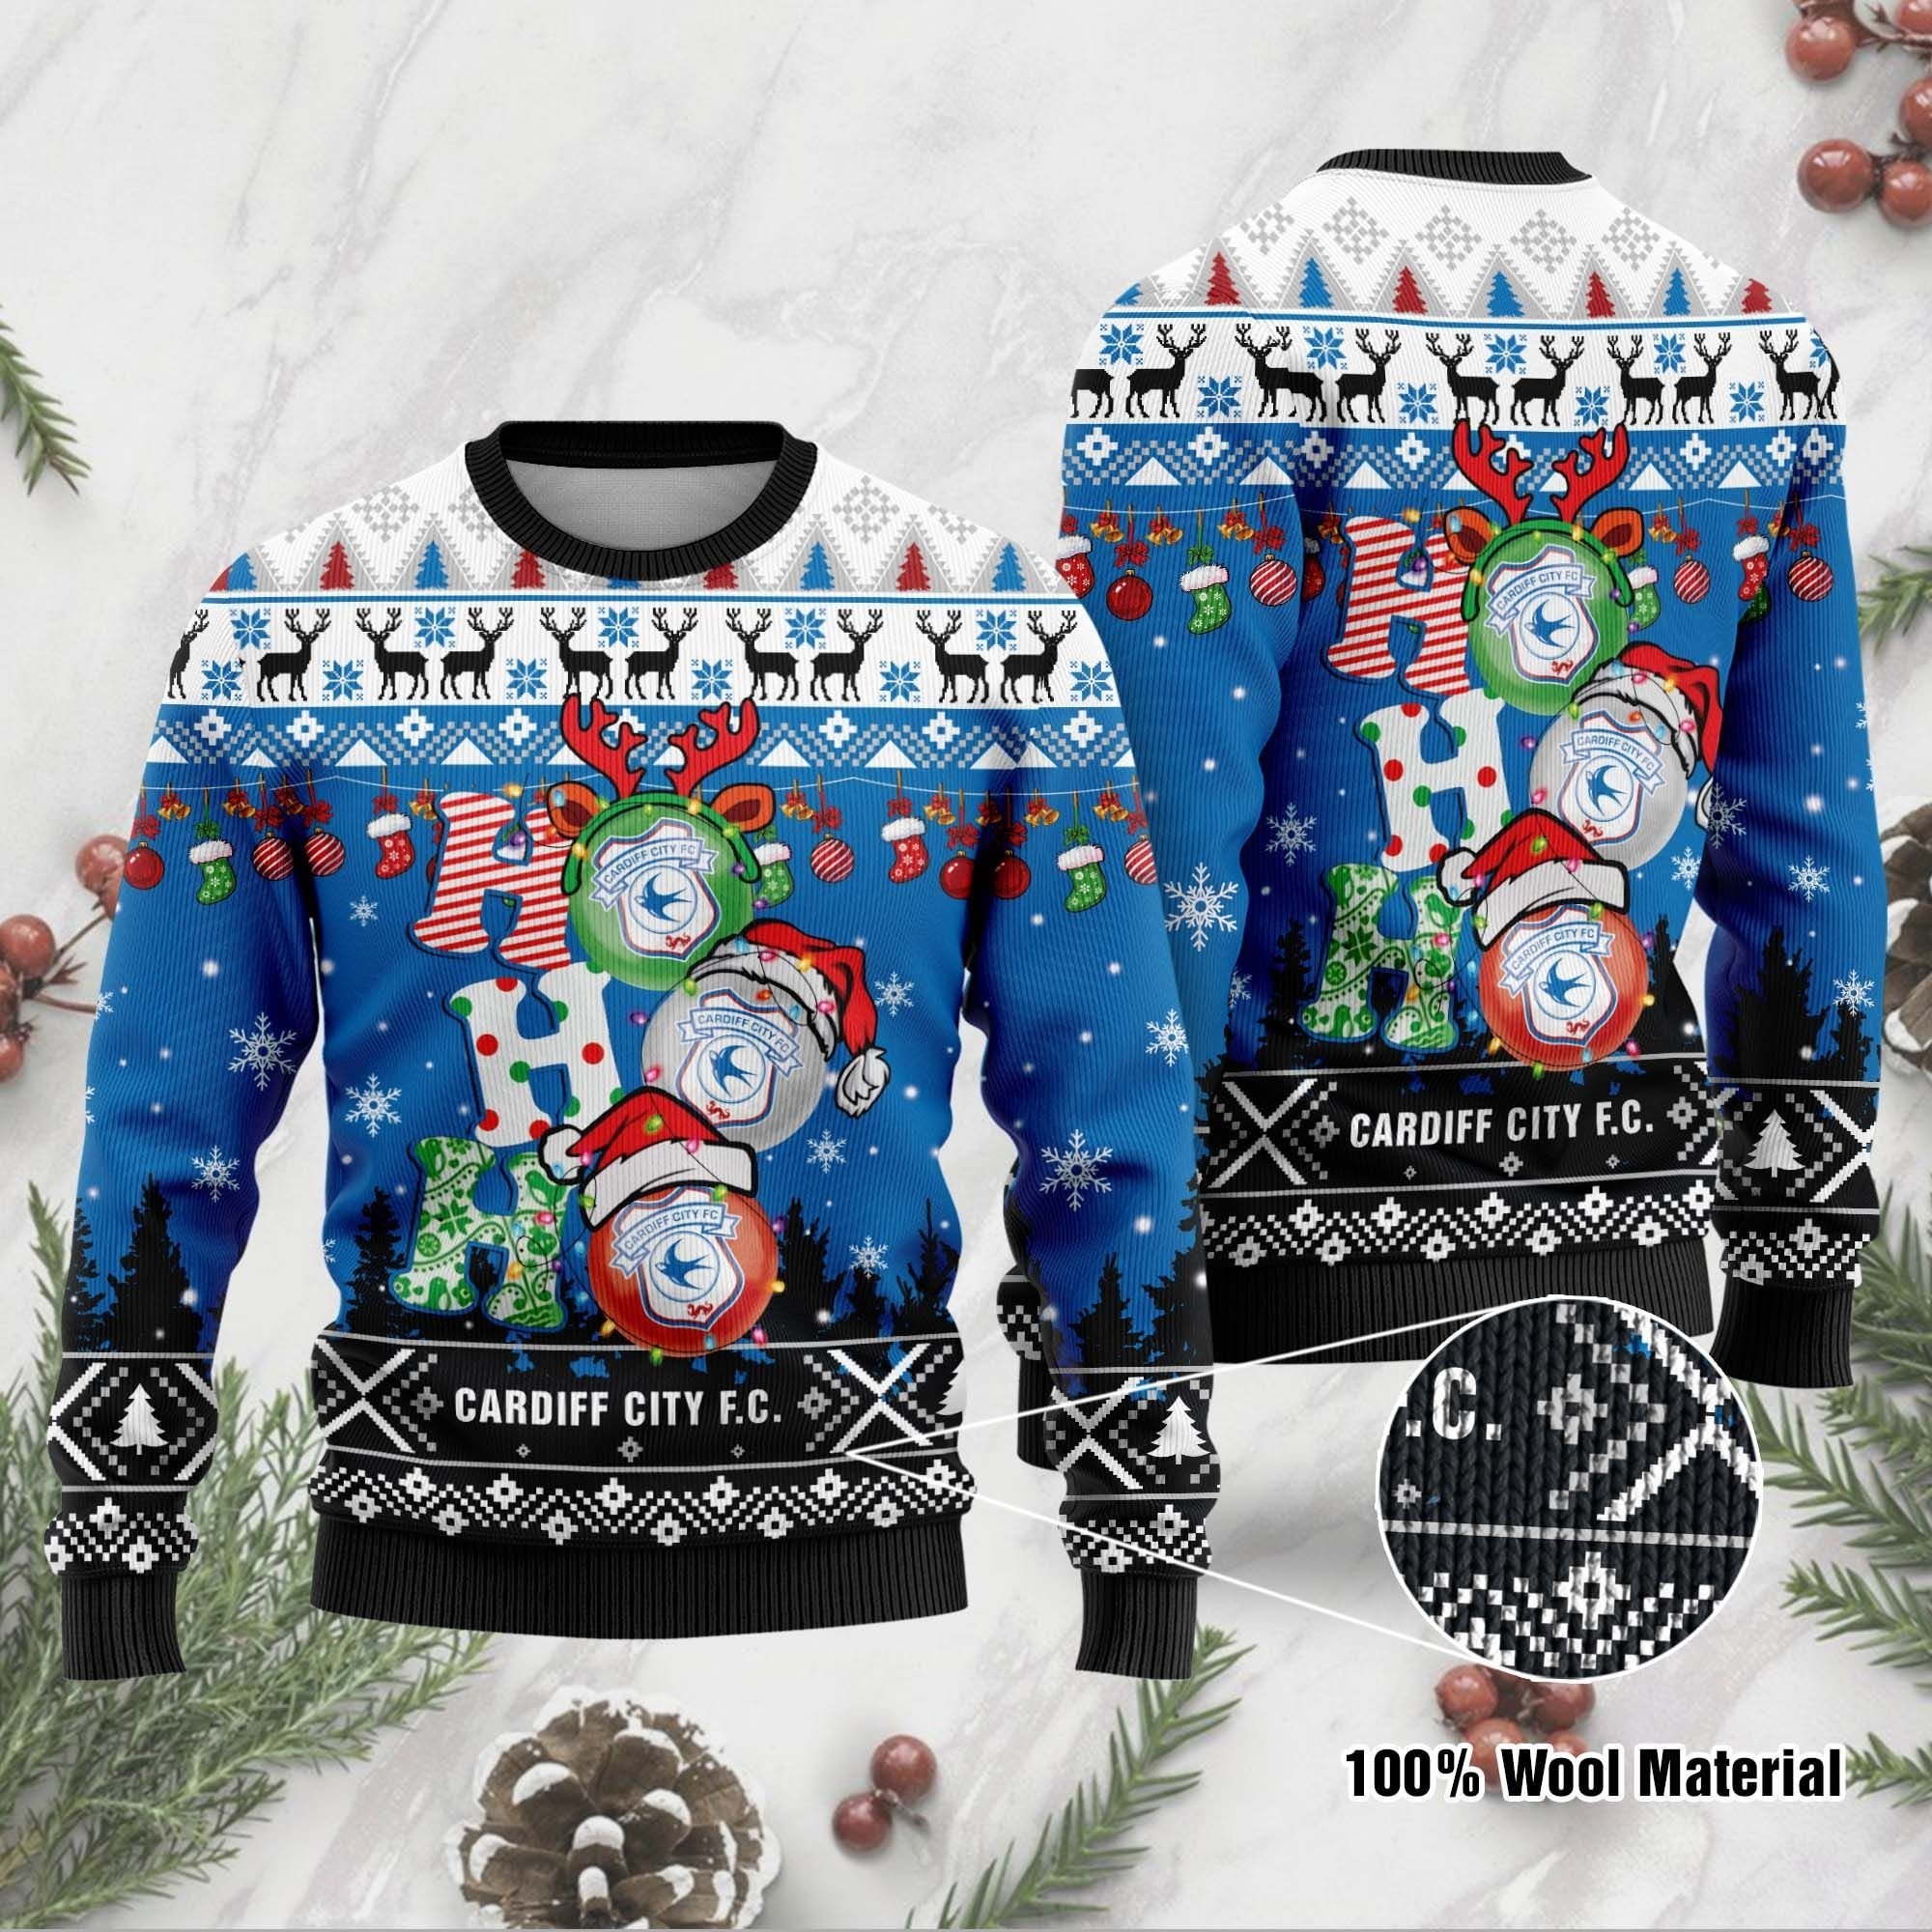 [ Amazing ] Cardiff City FC Ho Ho Ho ugly christmas sweater – Saleoff 271121